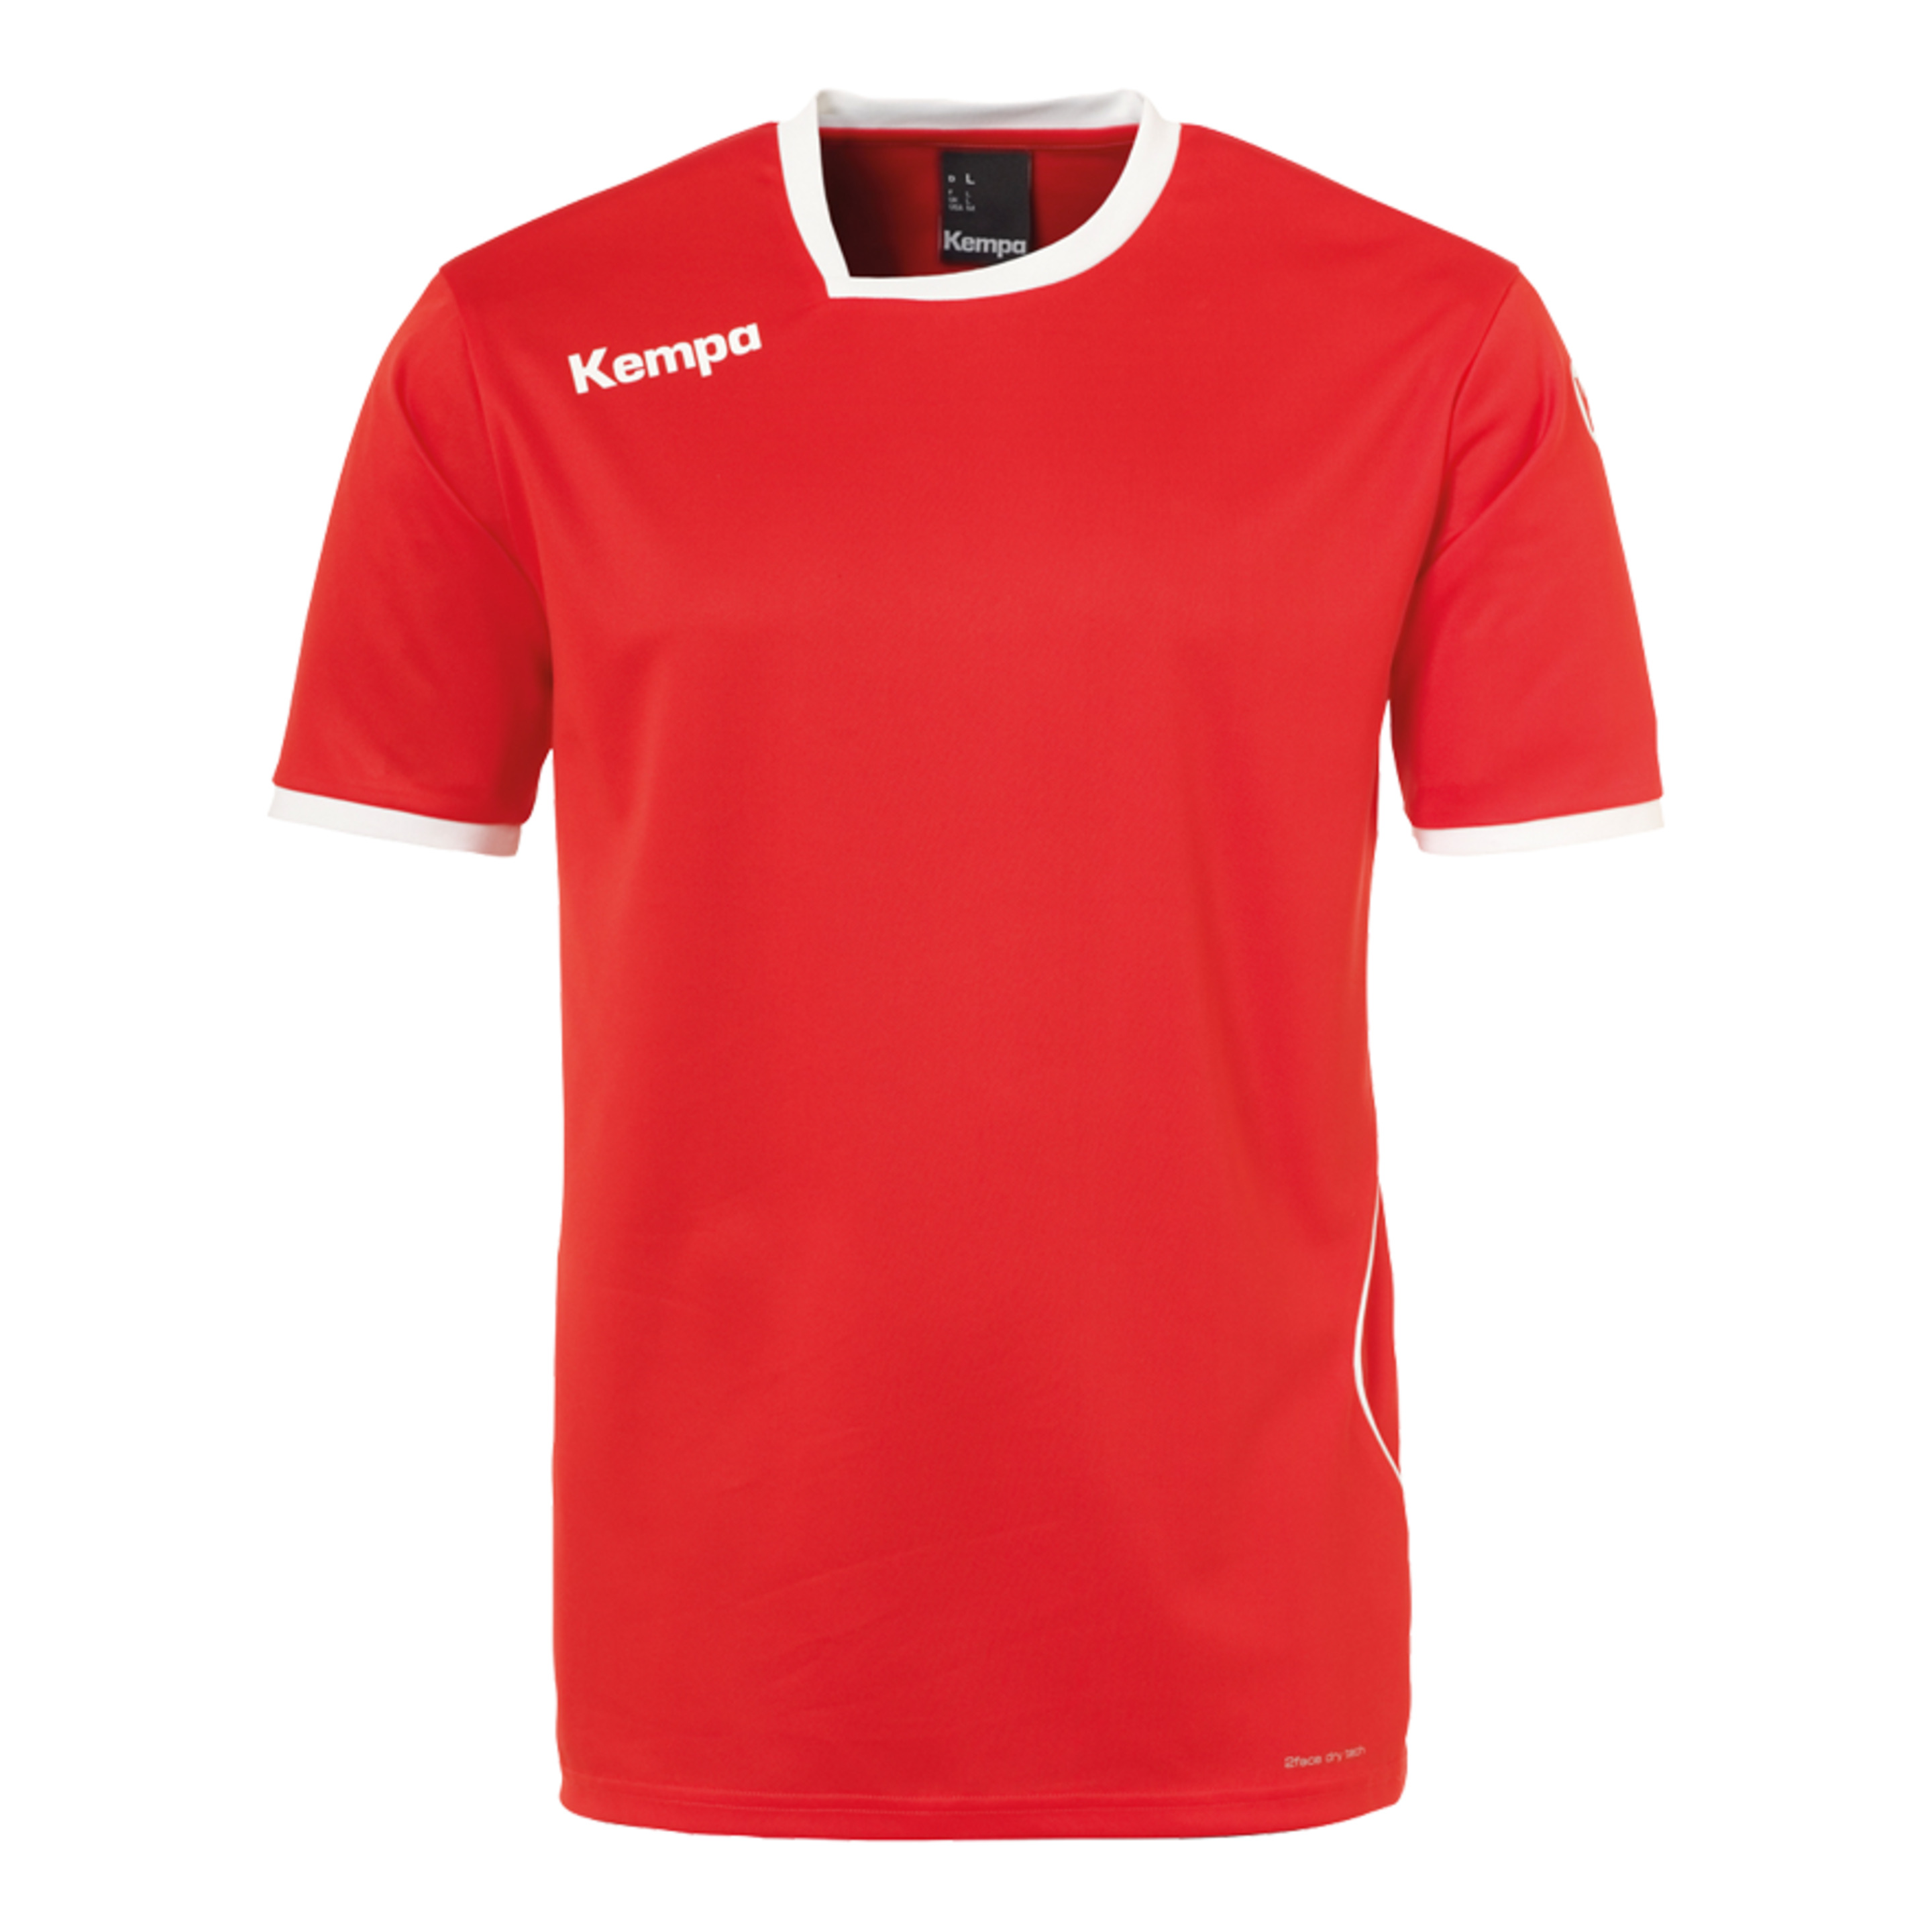 Curve Camiseta Rojo/blanco Kempa